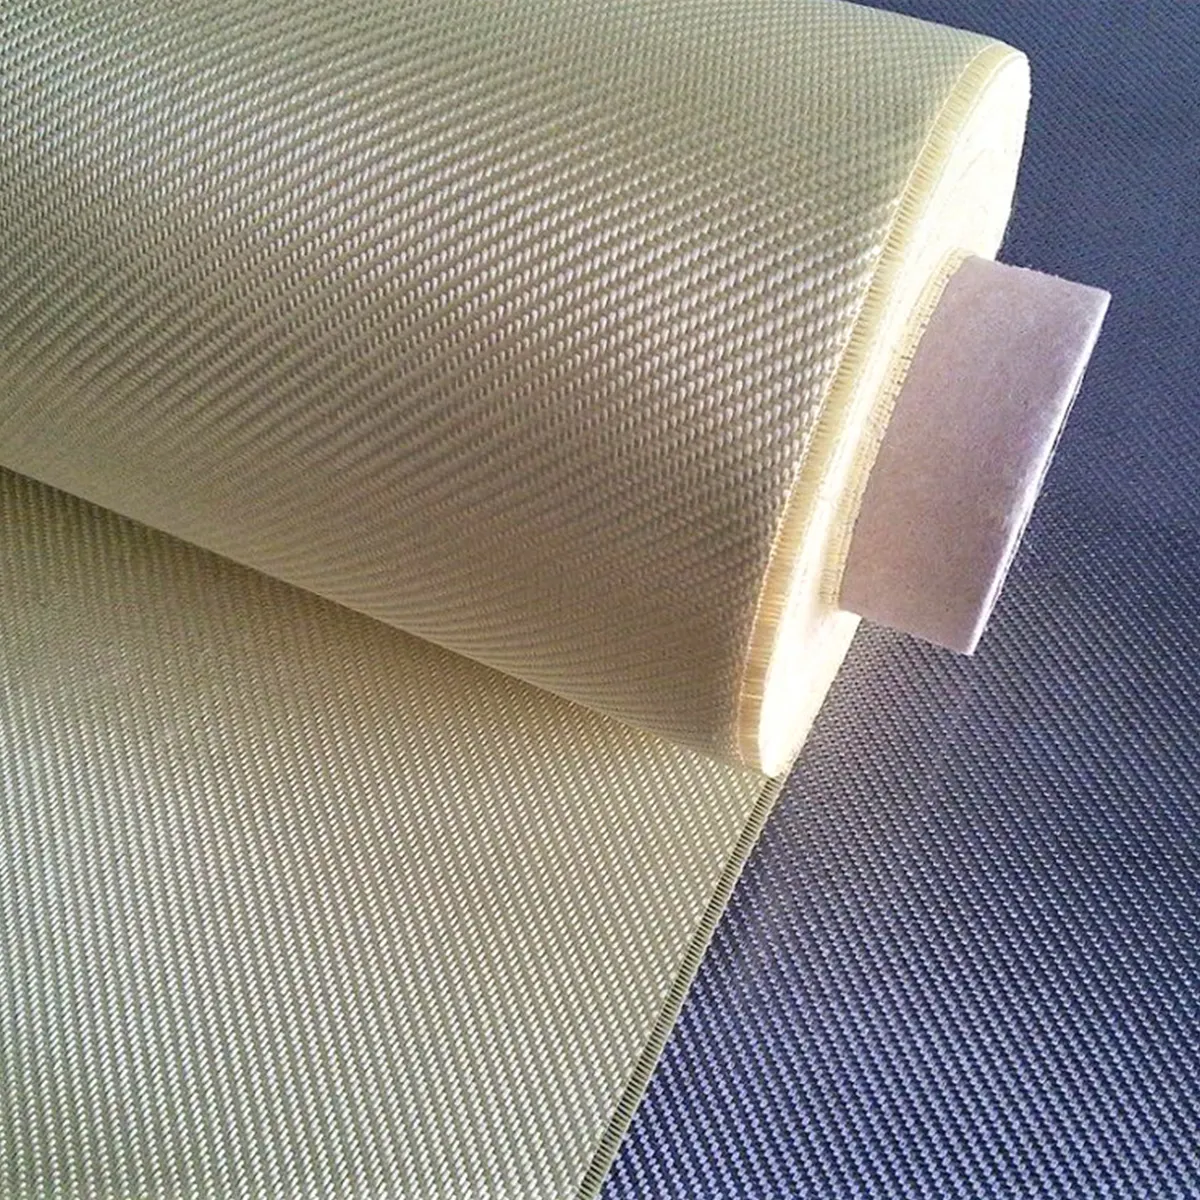 Woven meta aramid fiber ballistic tear resistant fireproof fr fire flame resistant kevlars fabric